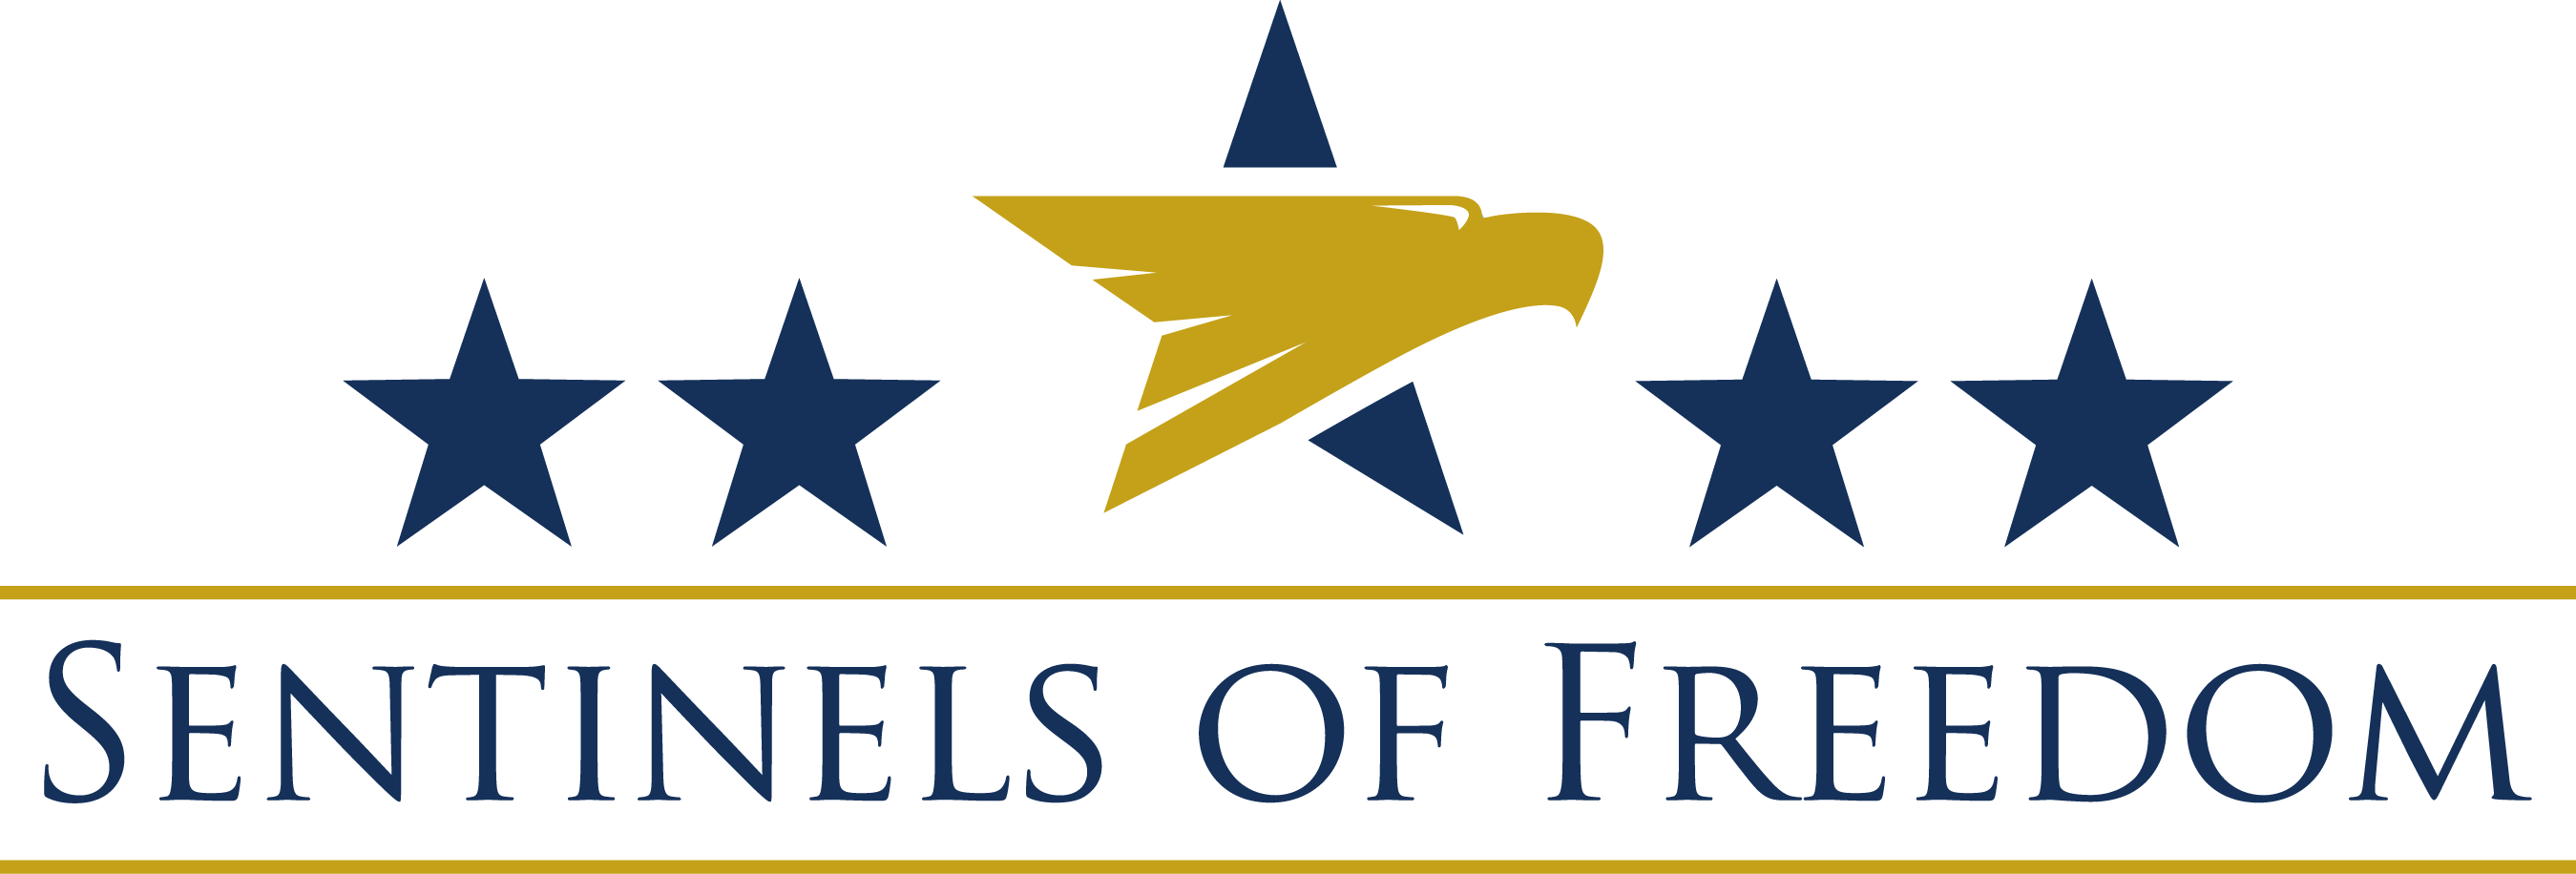 Sentinels of Freedom logo